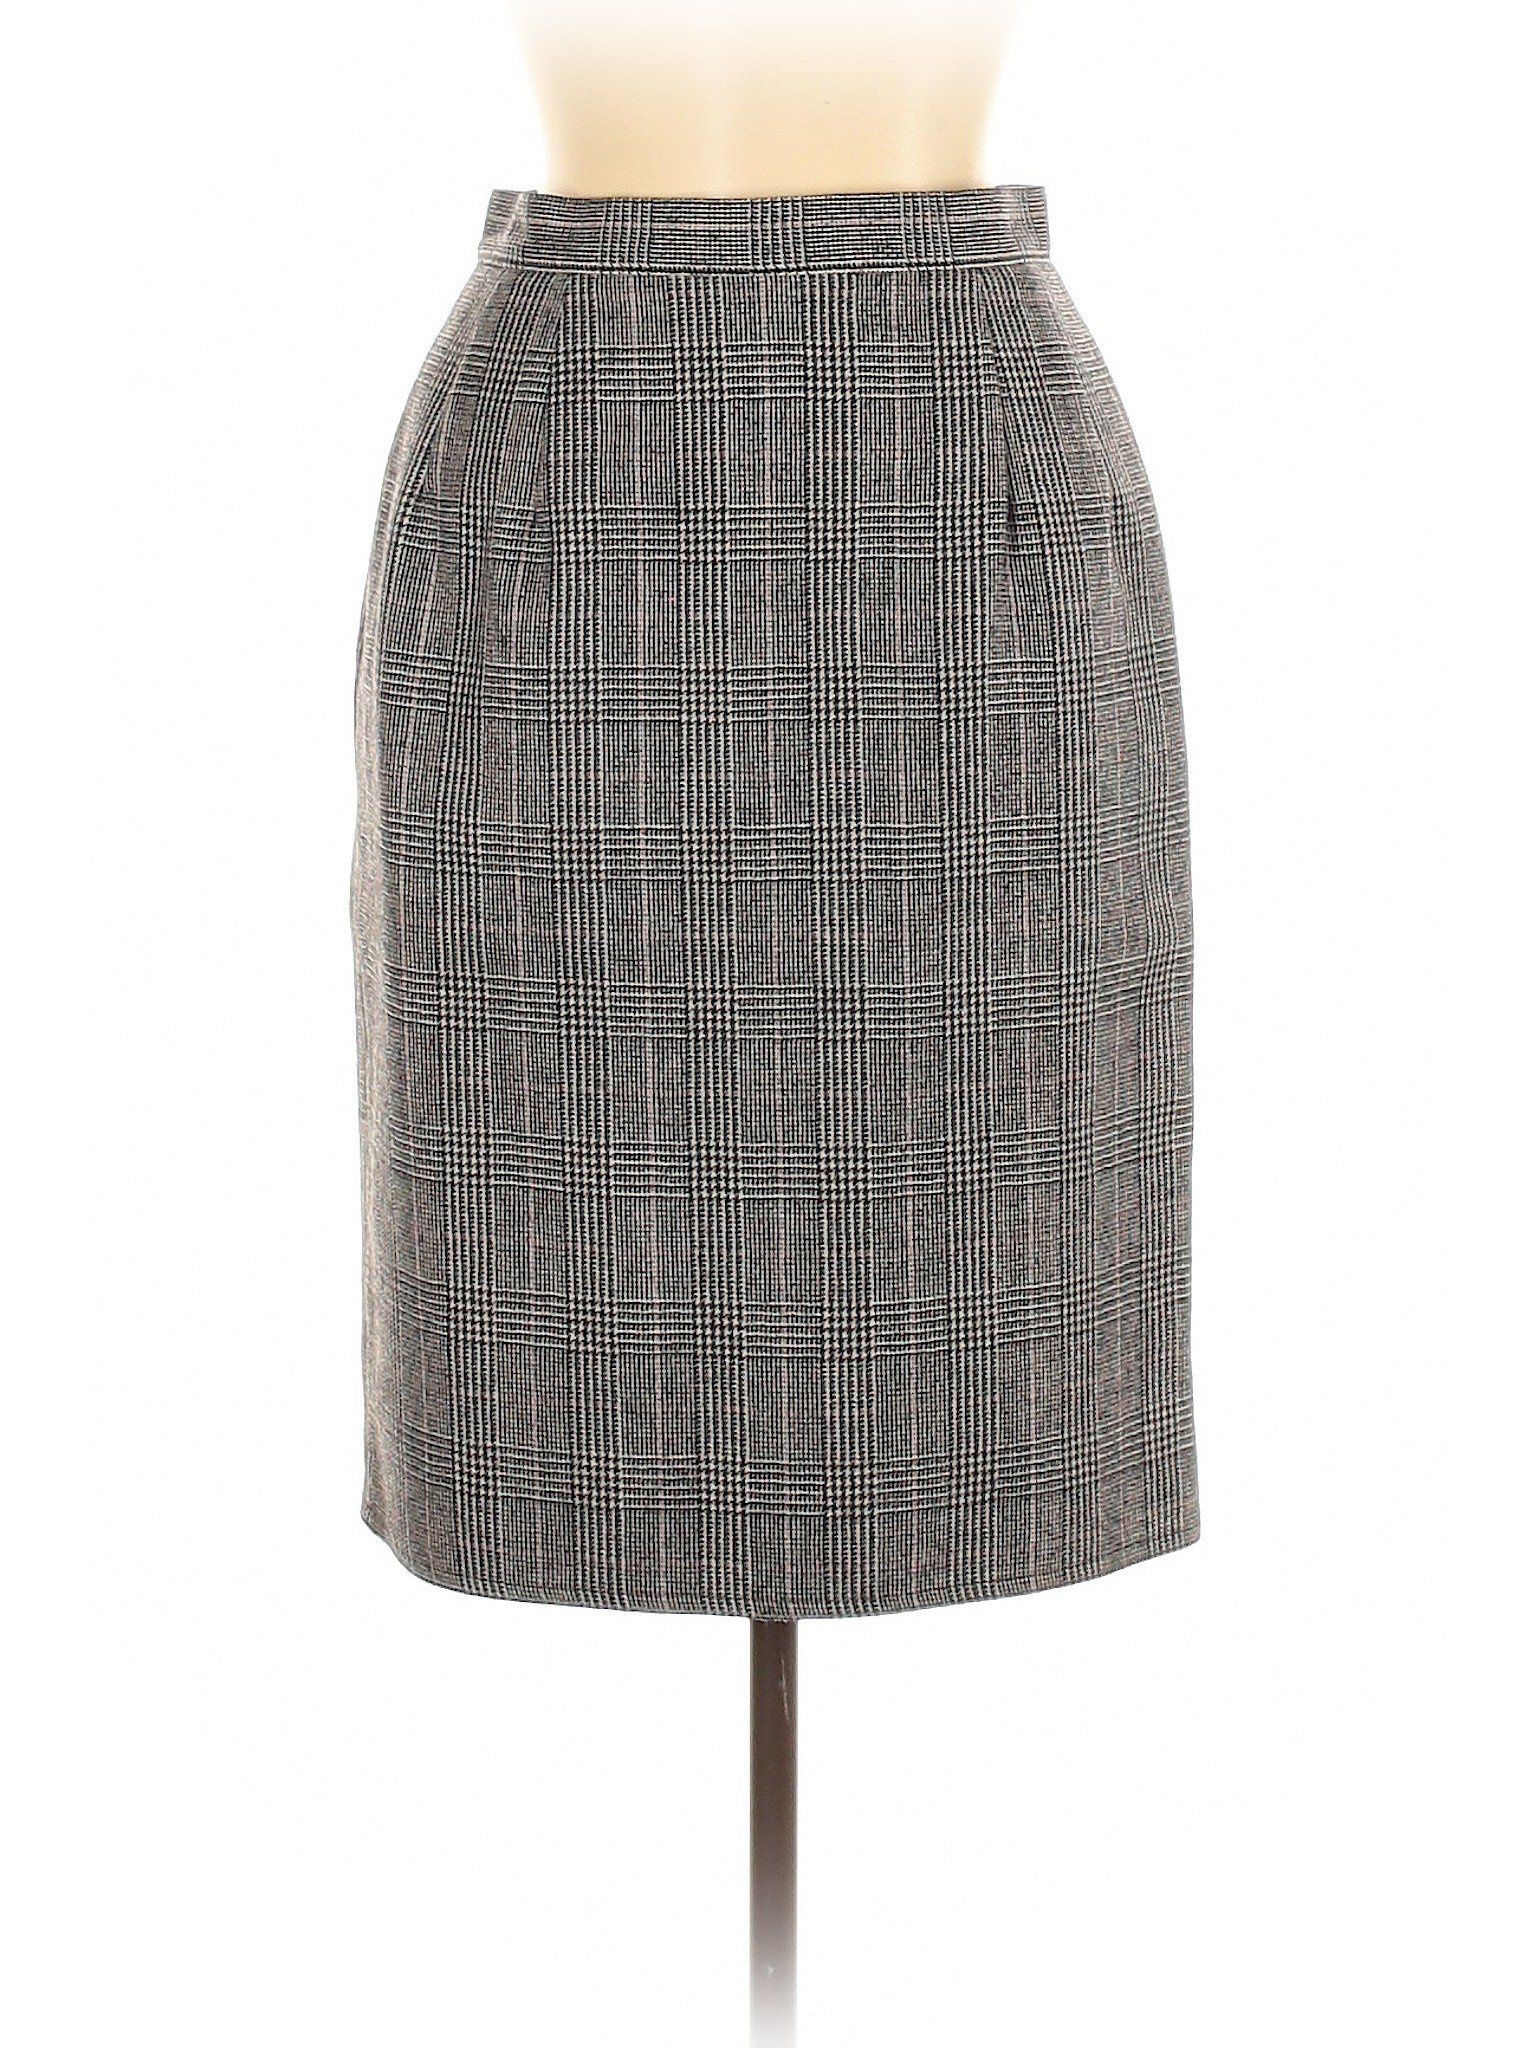 Harve Benard by Benard Holtzman Women Gray Wool Skirt 4 Petites | eBay